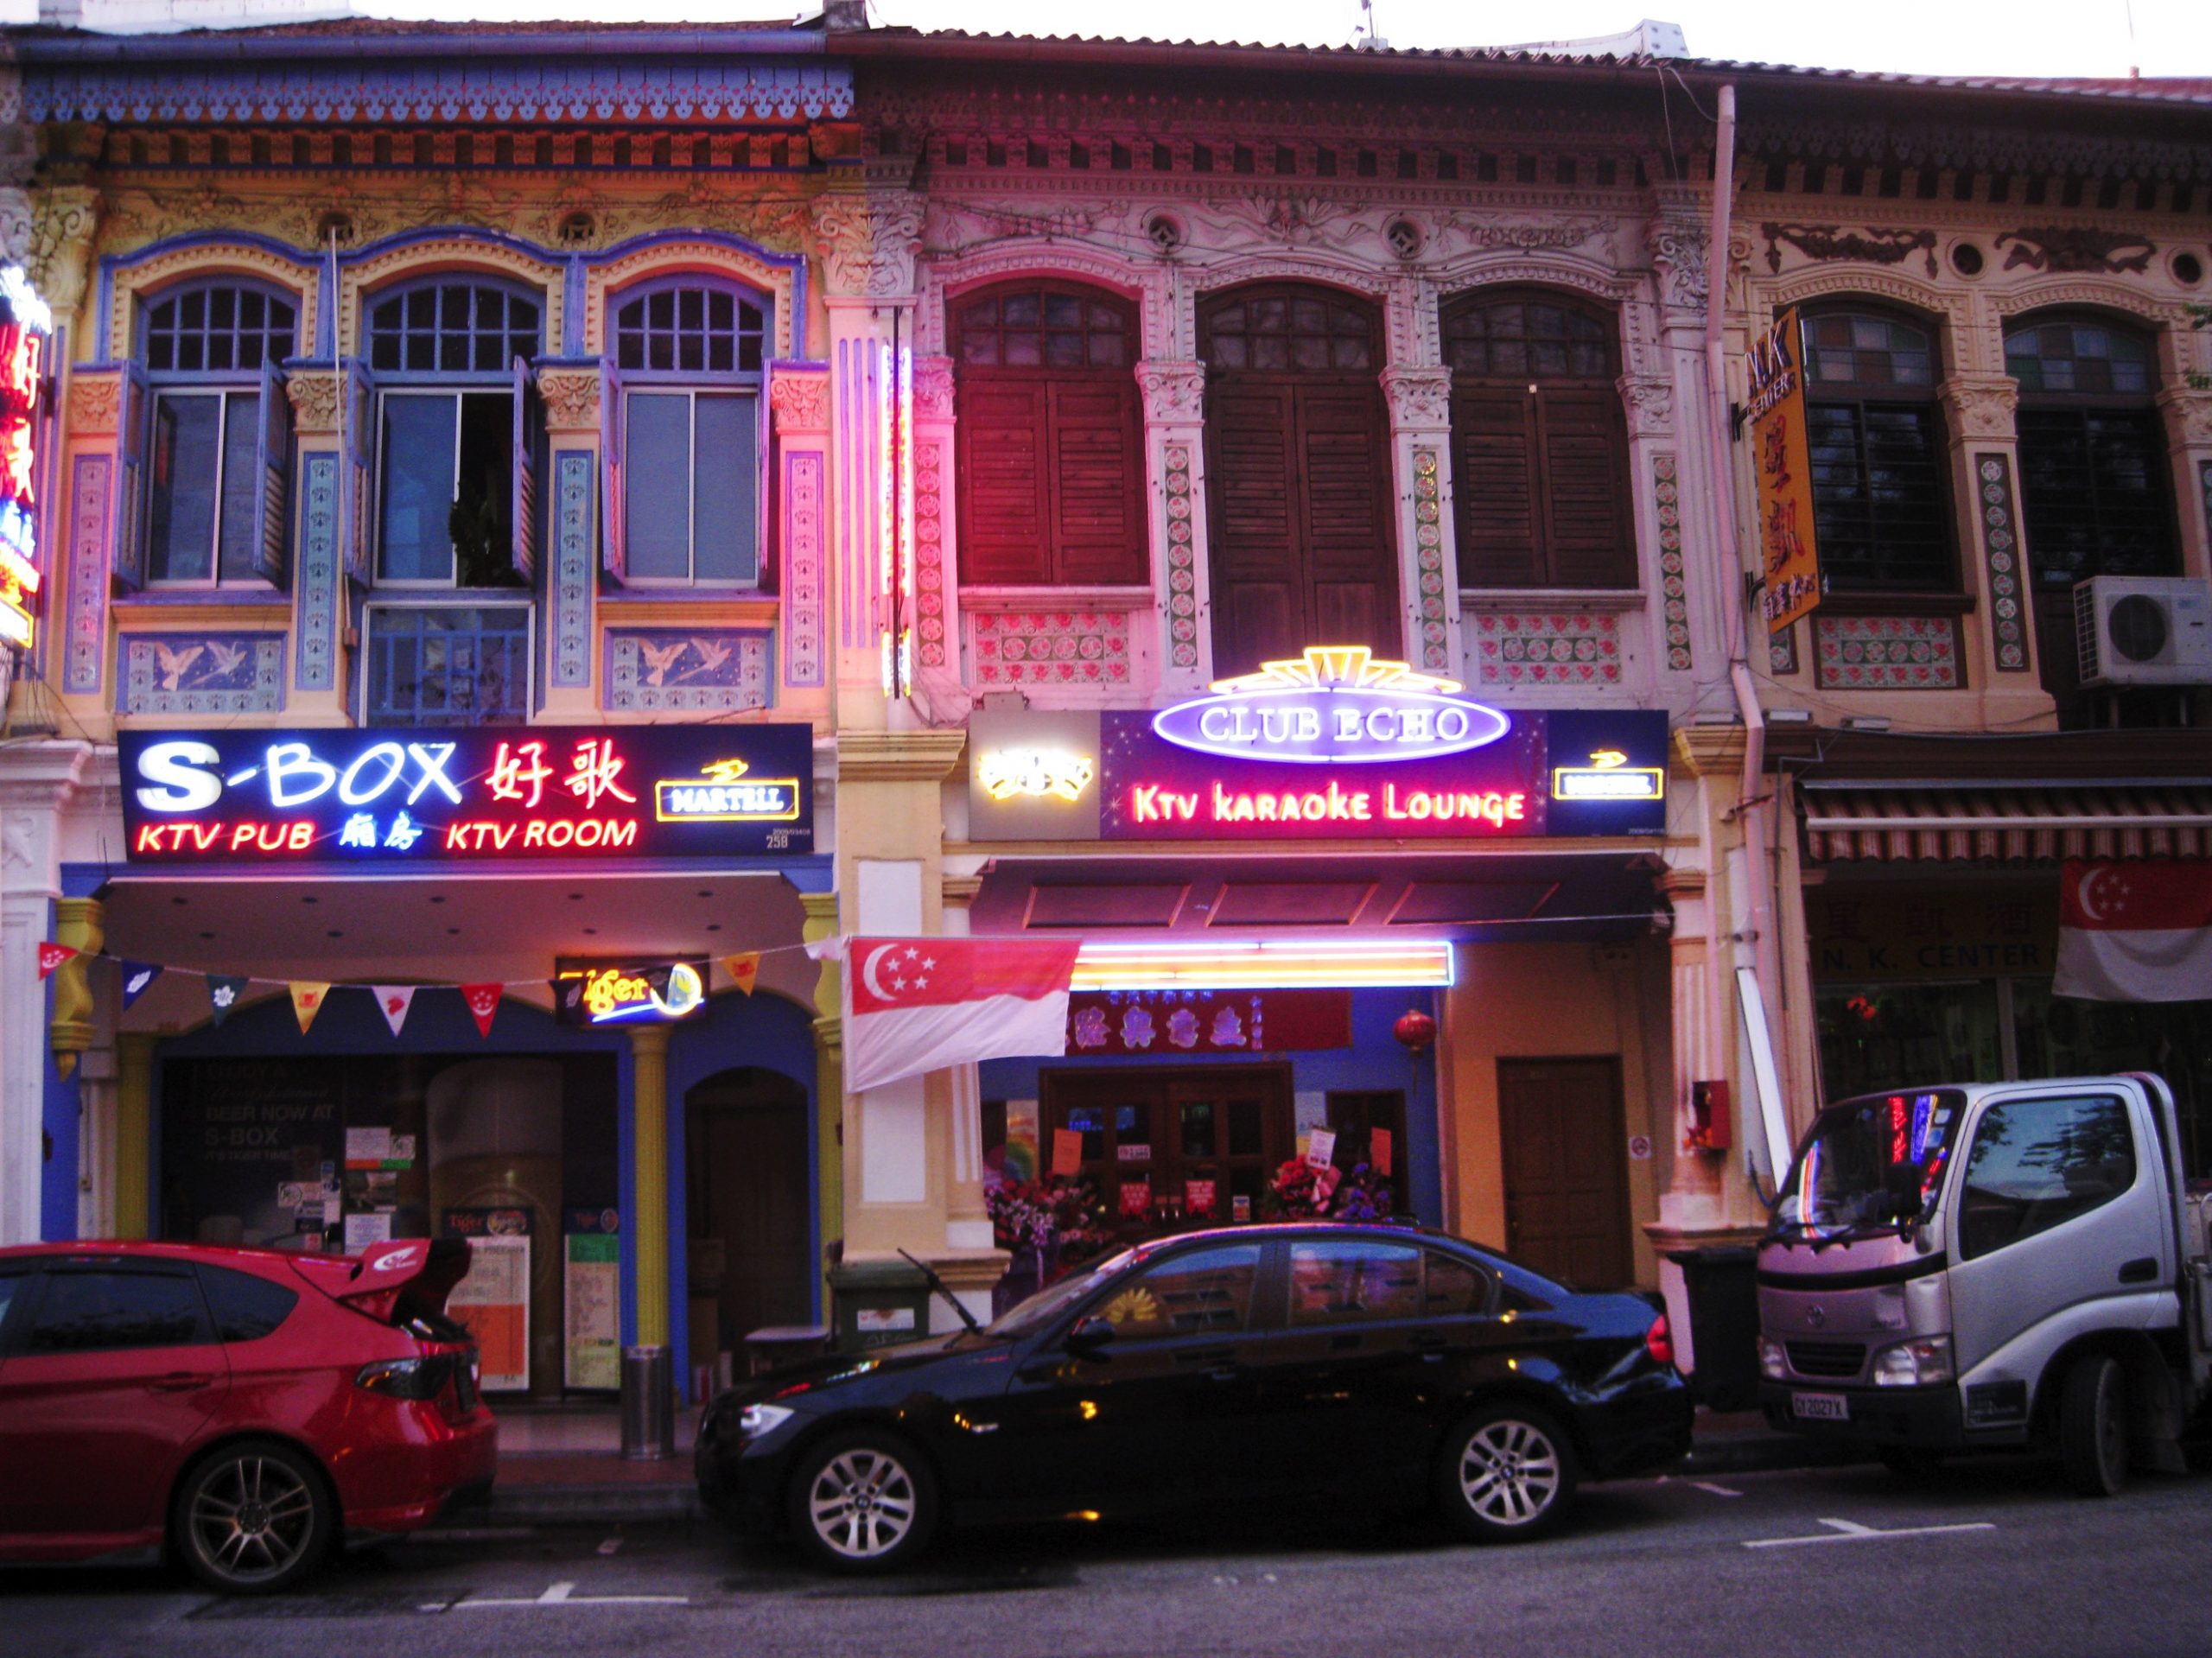 A pub on Joo Chiat Rd, Singapore